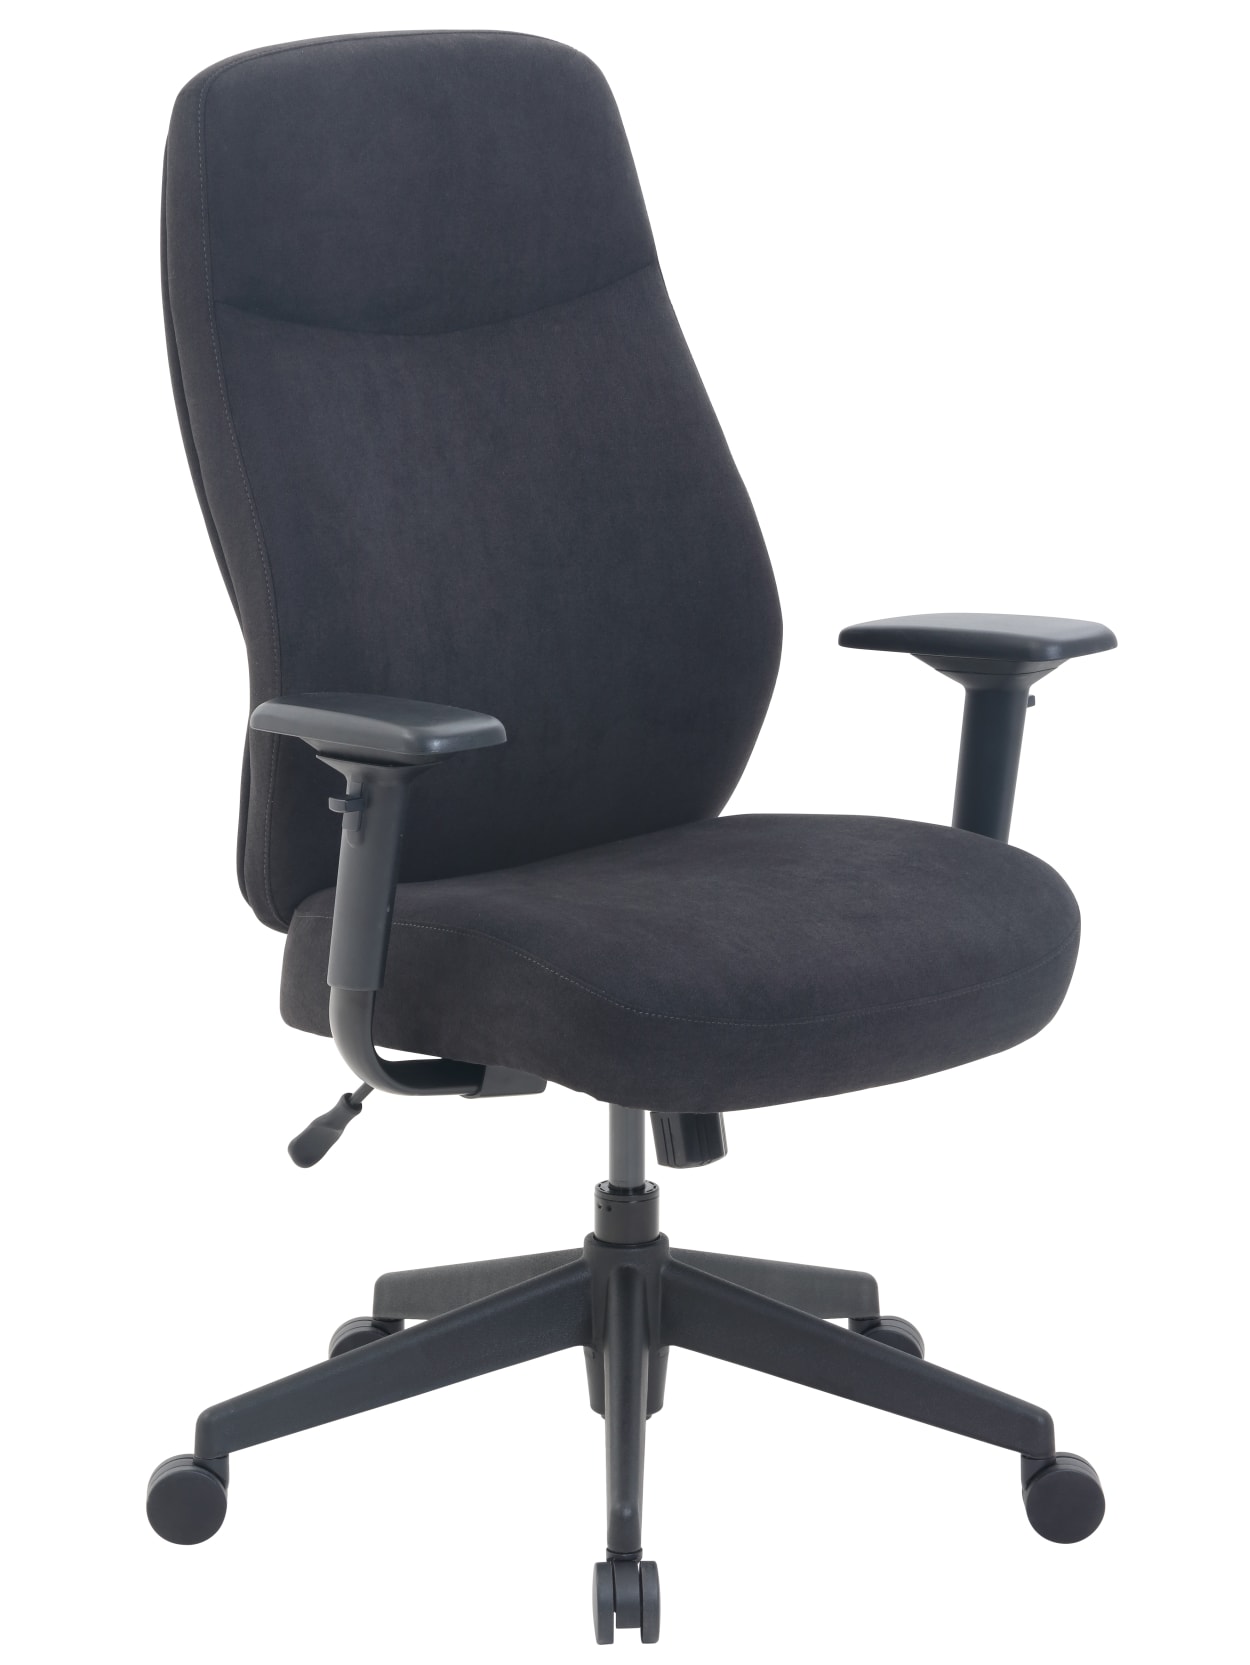 Serta Motif Fabric High Back Chair Black Office Depot